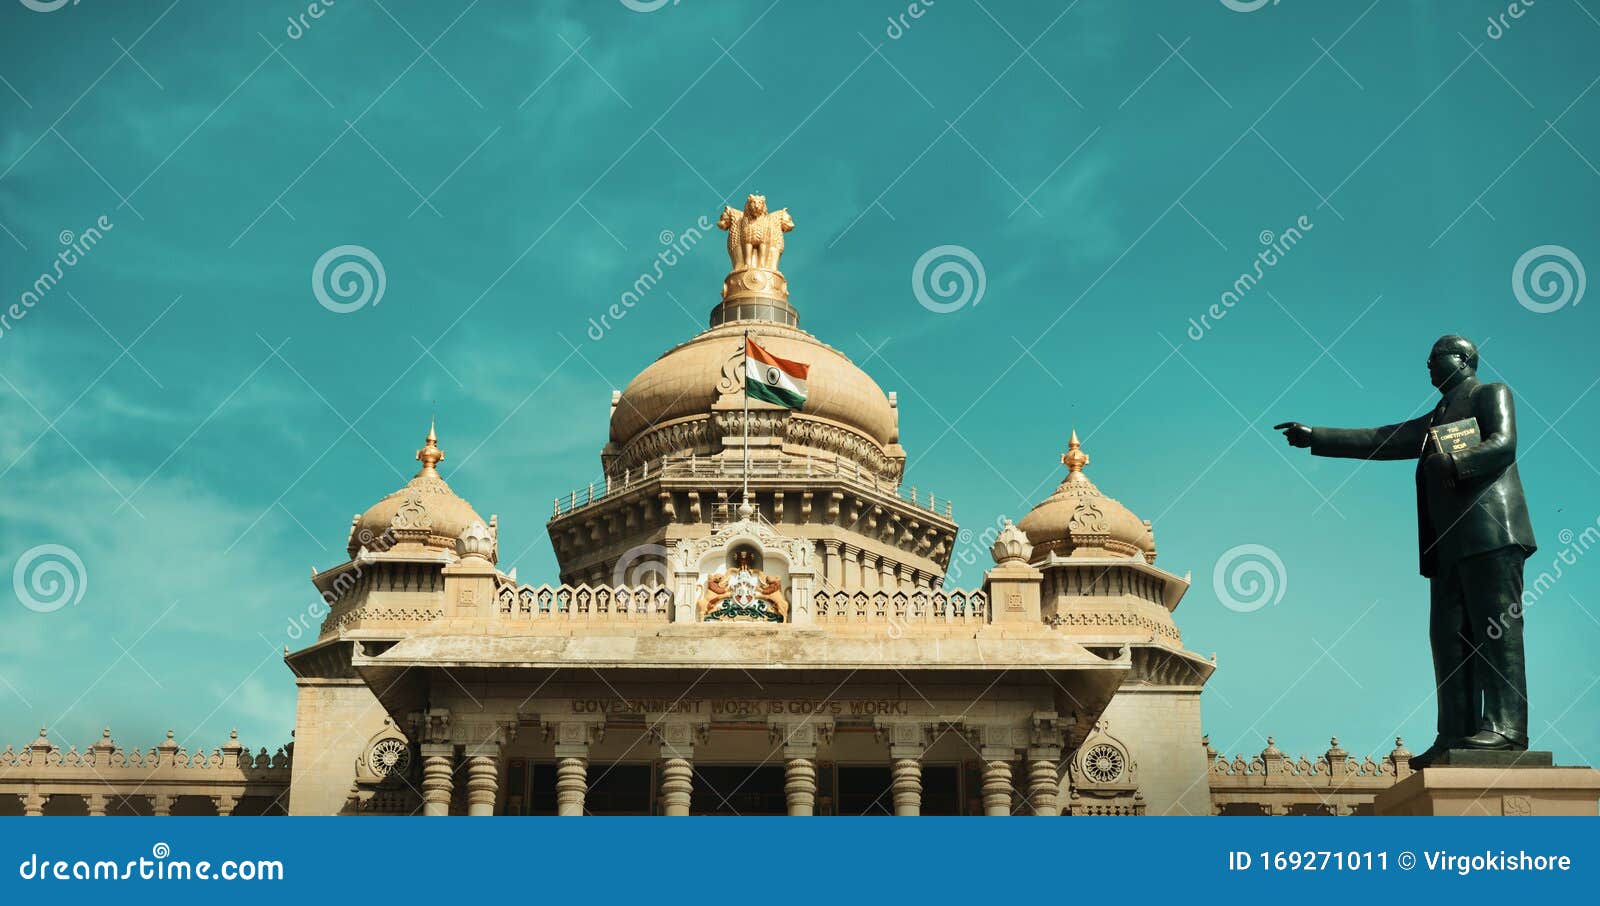 the vidhana soudha located in bangalore, is the seat of the state legislature of karnataka